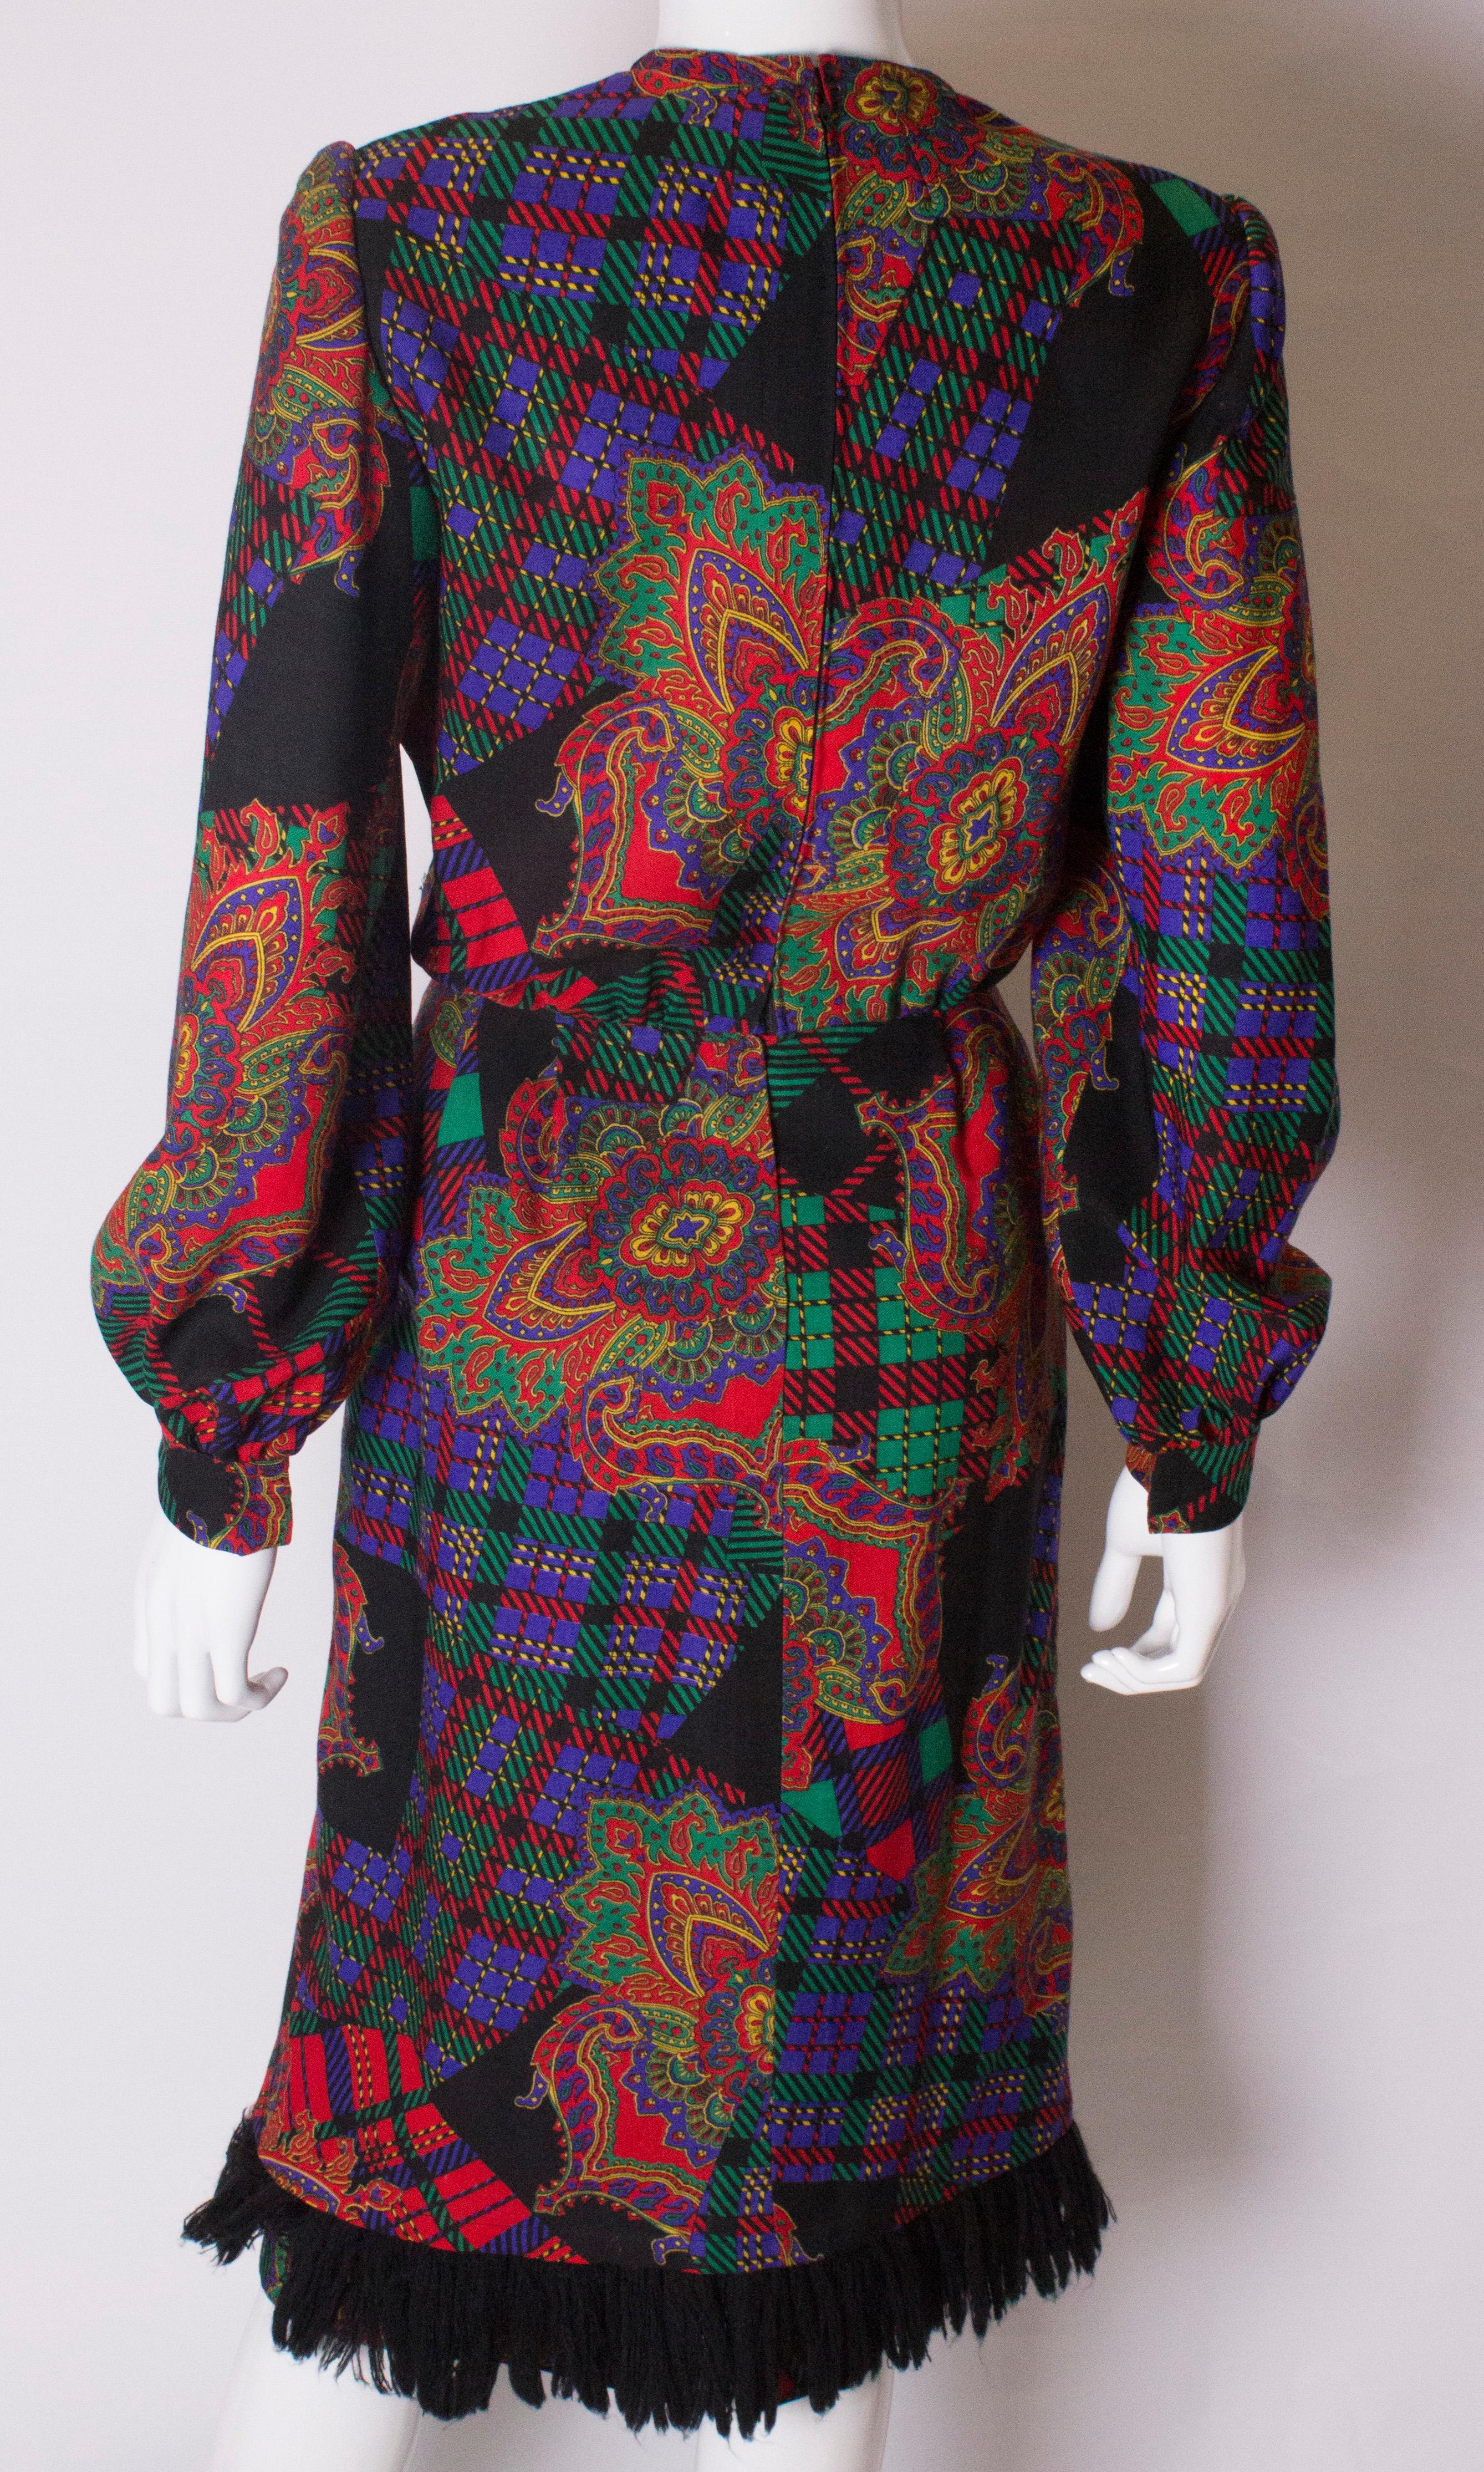 Vintage Donald Campbell Dress with Fringing at Hem For Sale 3